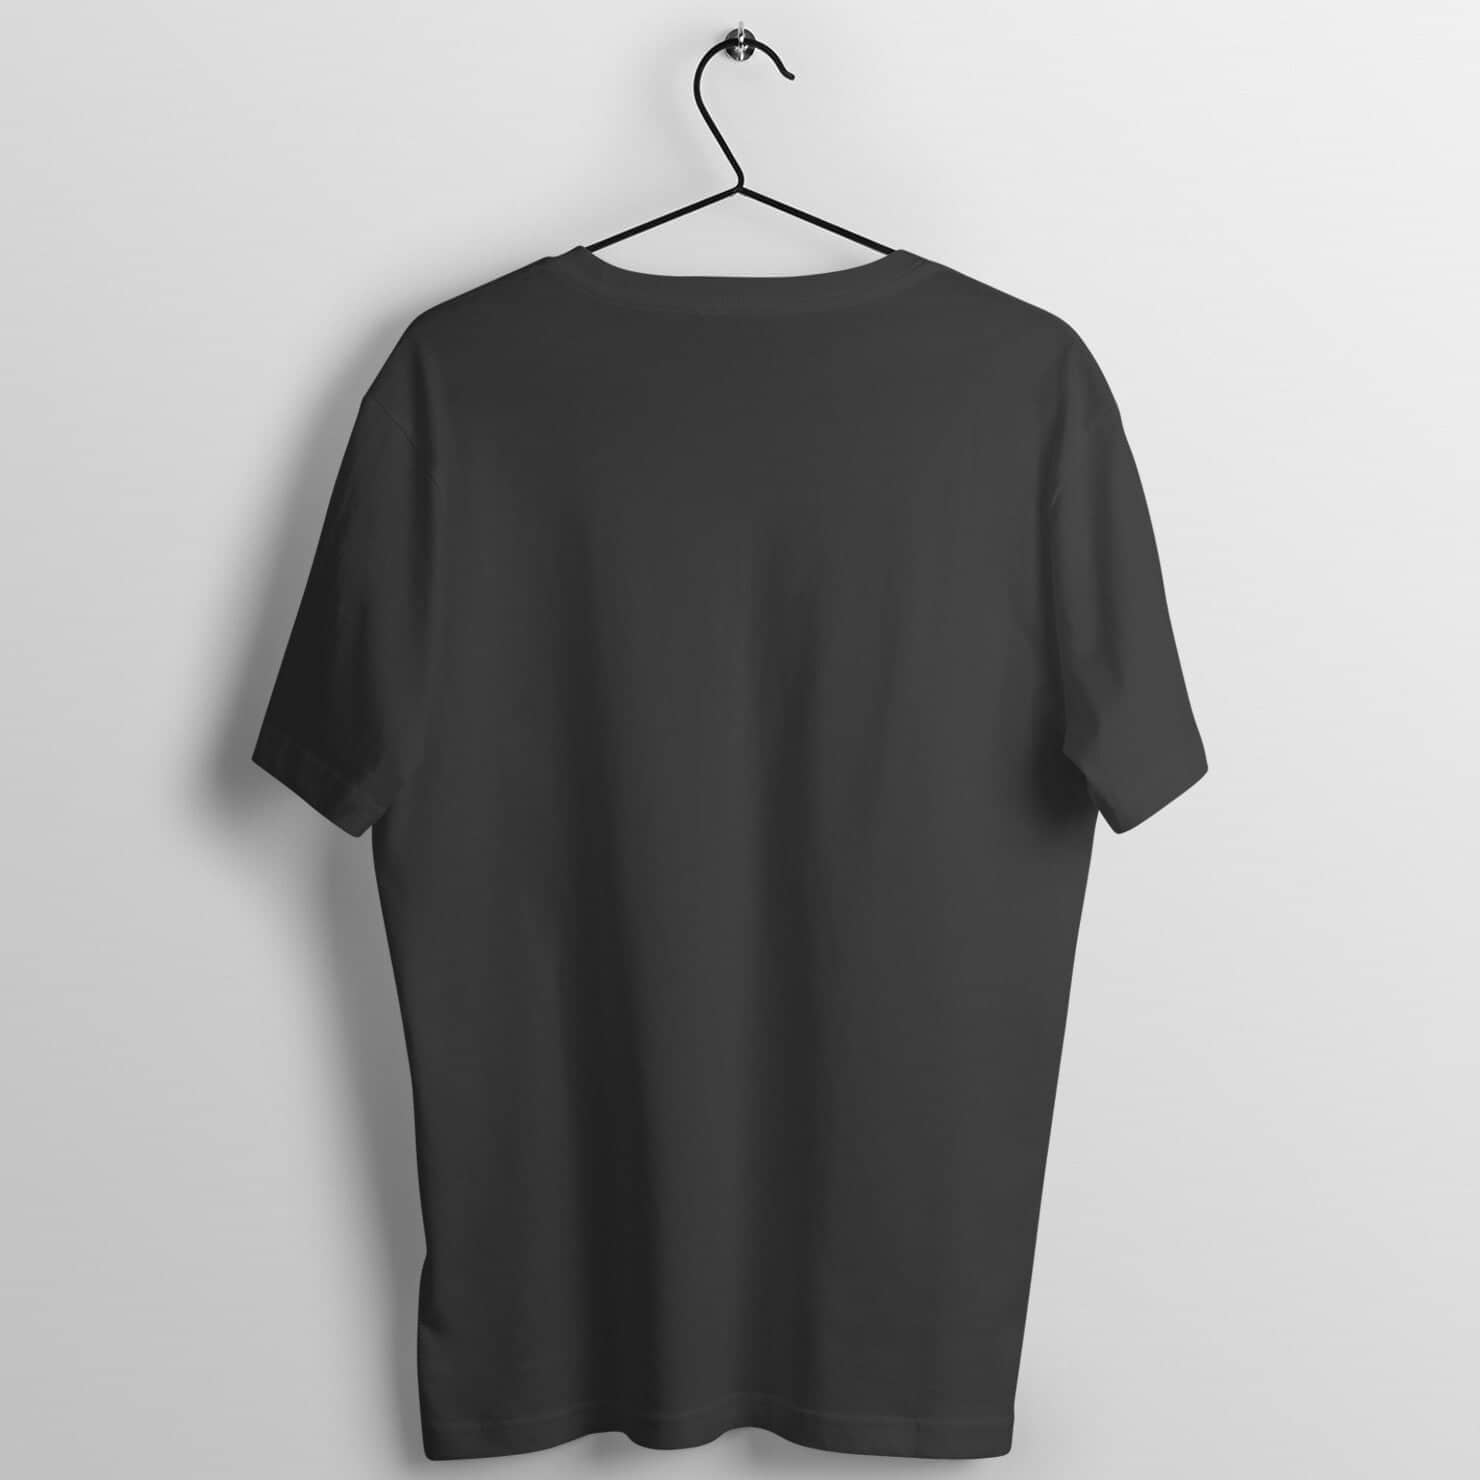 Baap Baap Hota Hai Funny Black T Shirt for Men and Women Printrove 